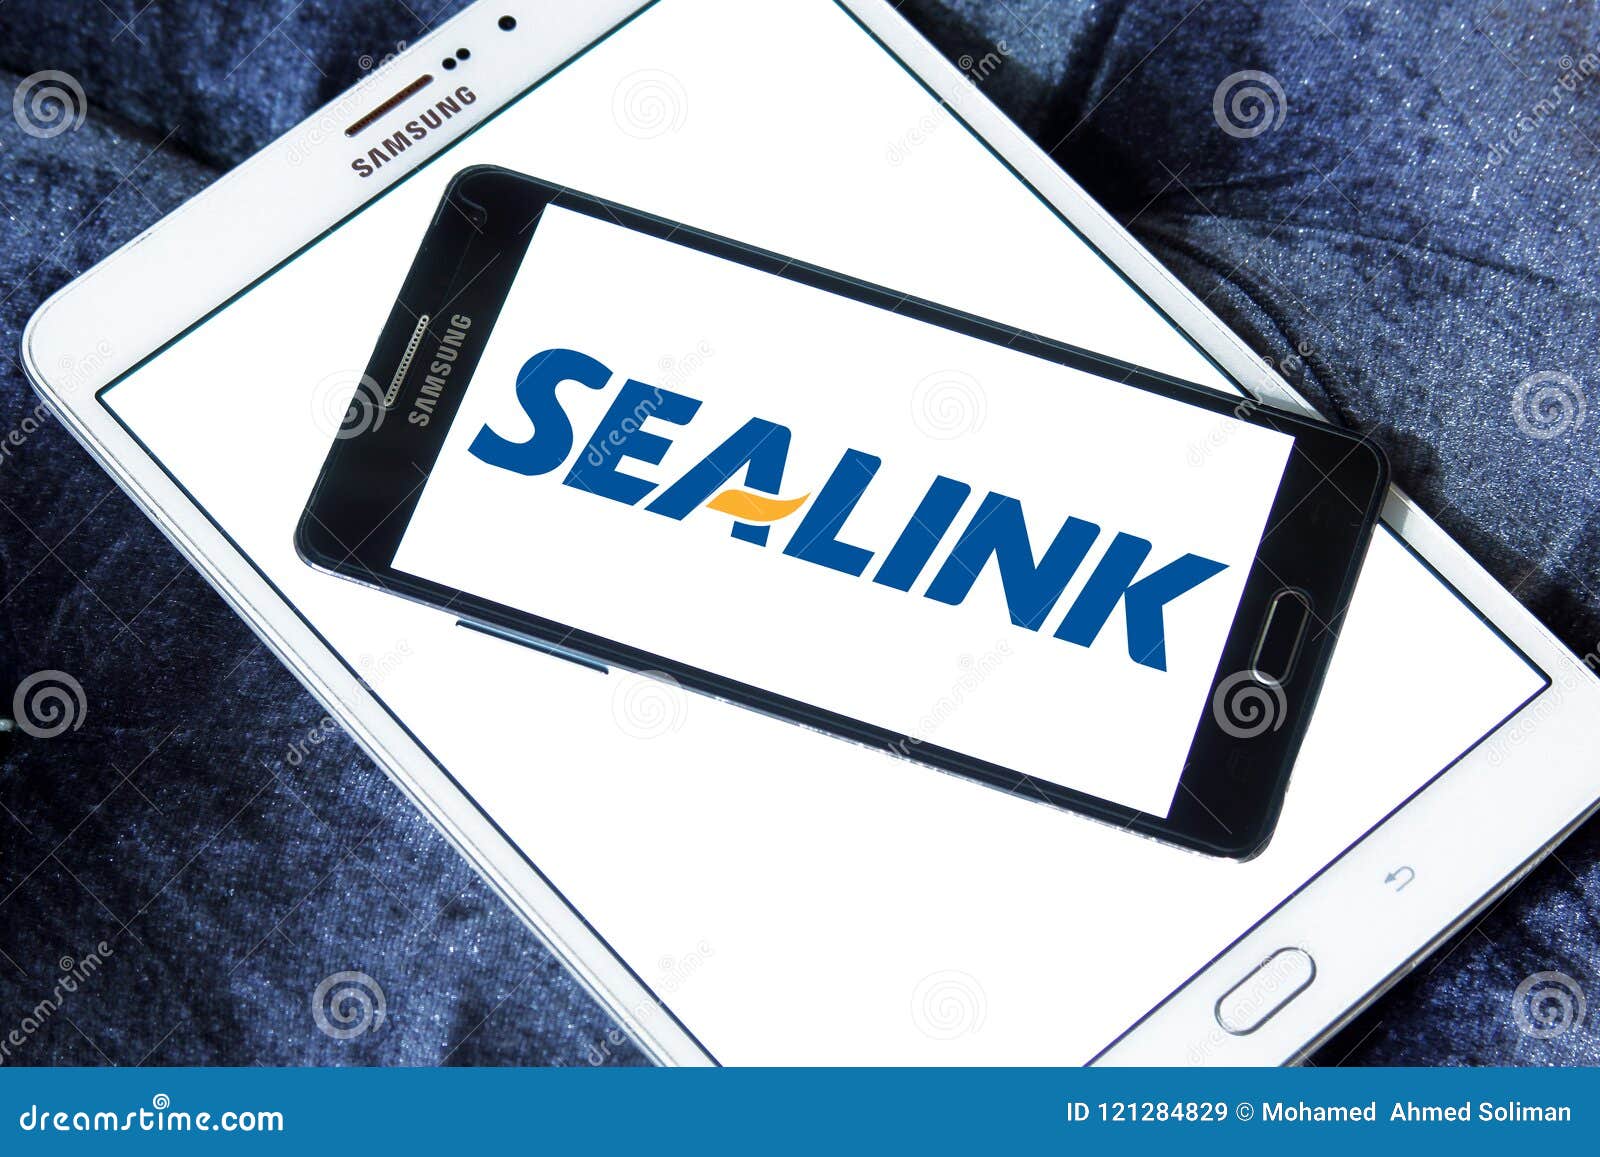 sealink travel insurance